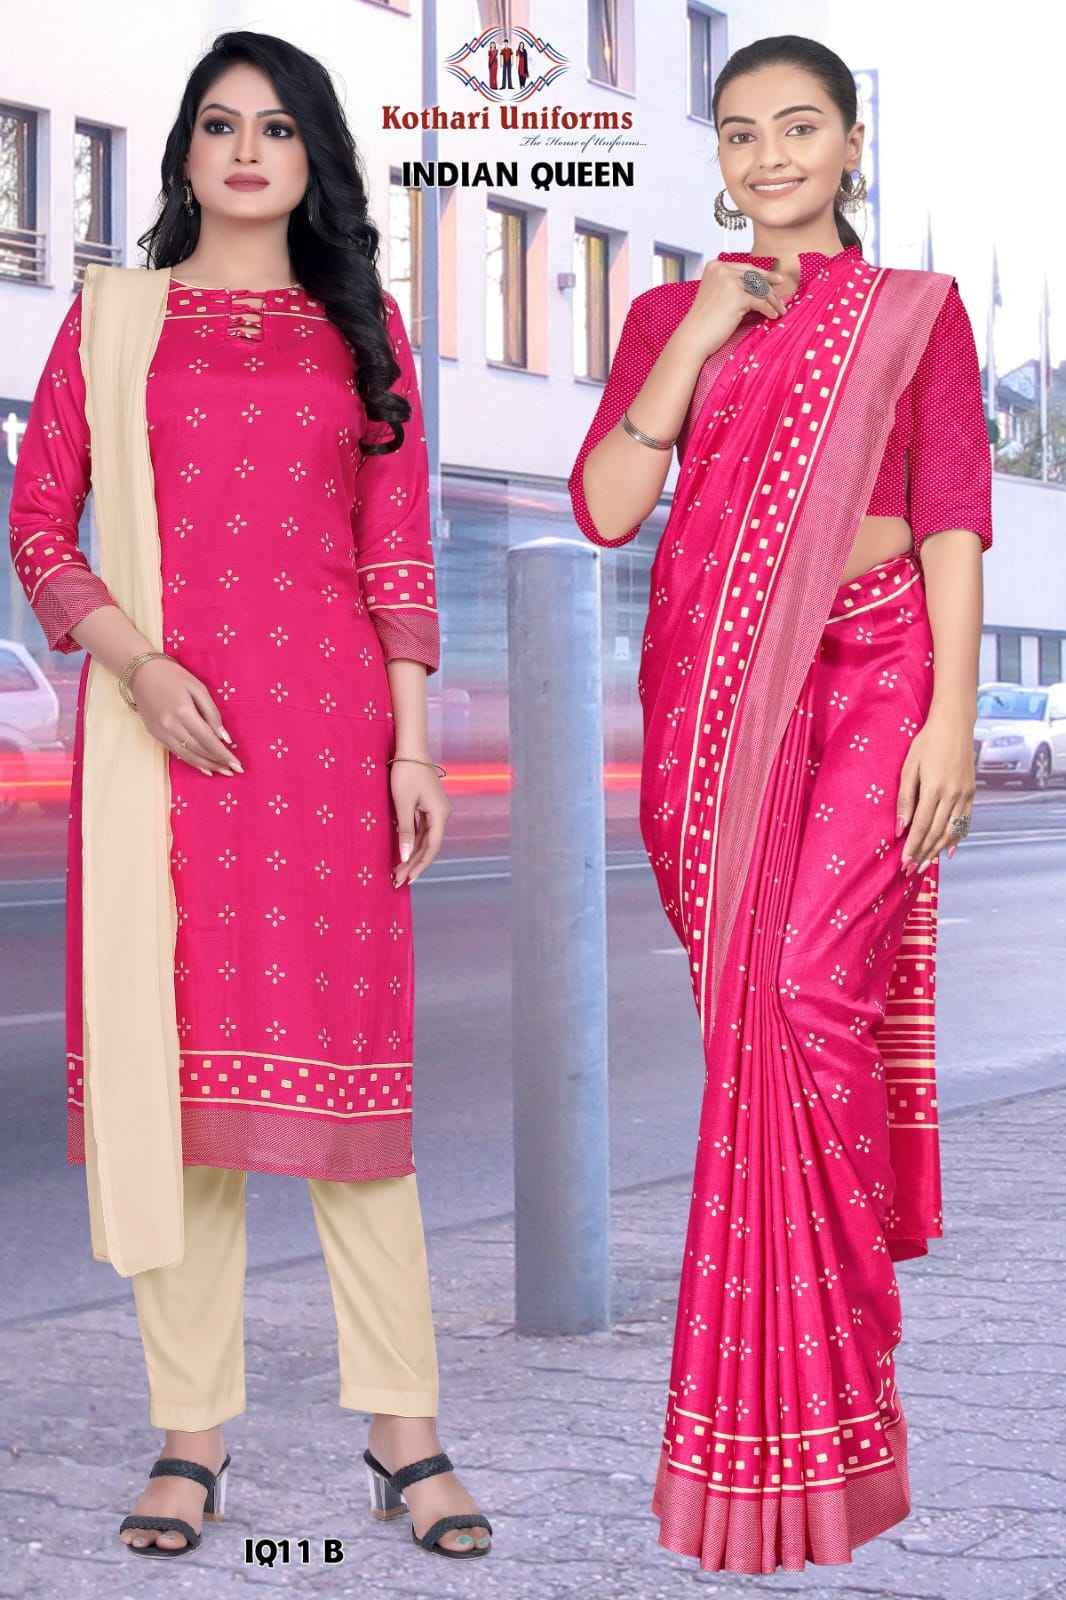  Pink and Blue Indian Queen - IQ11 B & CIQ11 B Women's Premium Small Printed Industrial Uniform Saree Salwar Combo